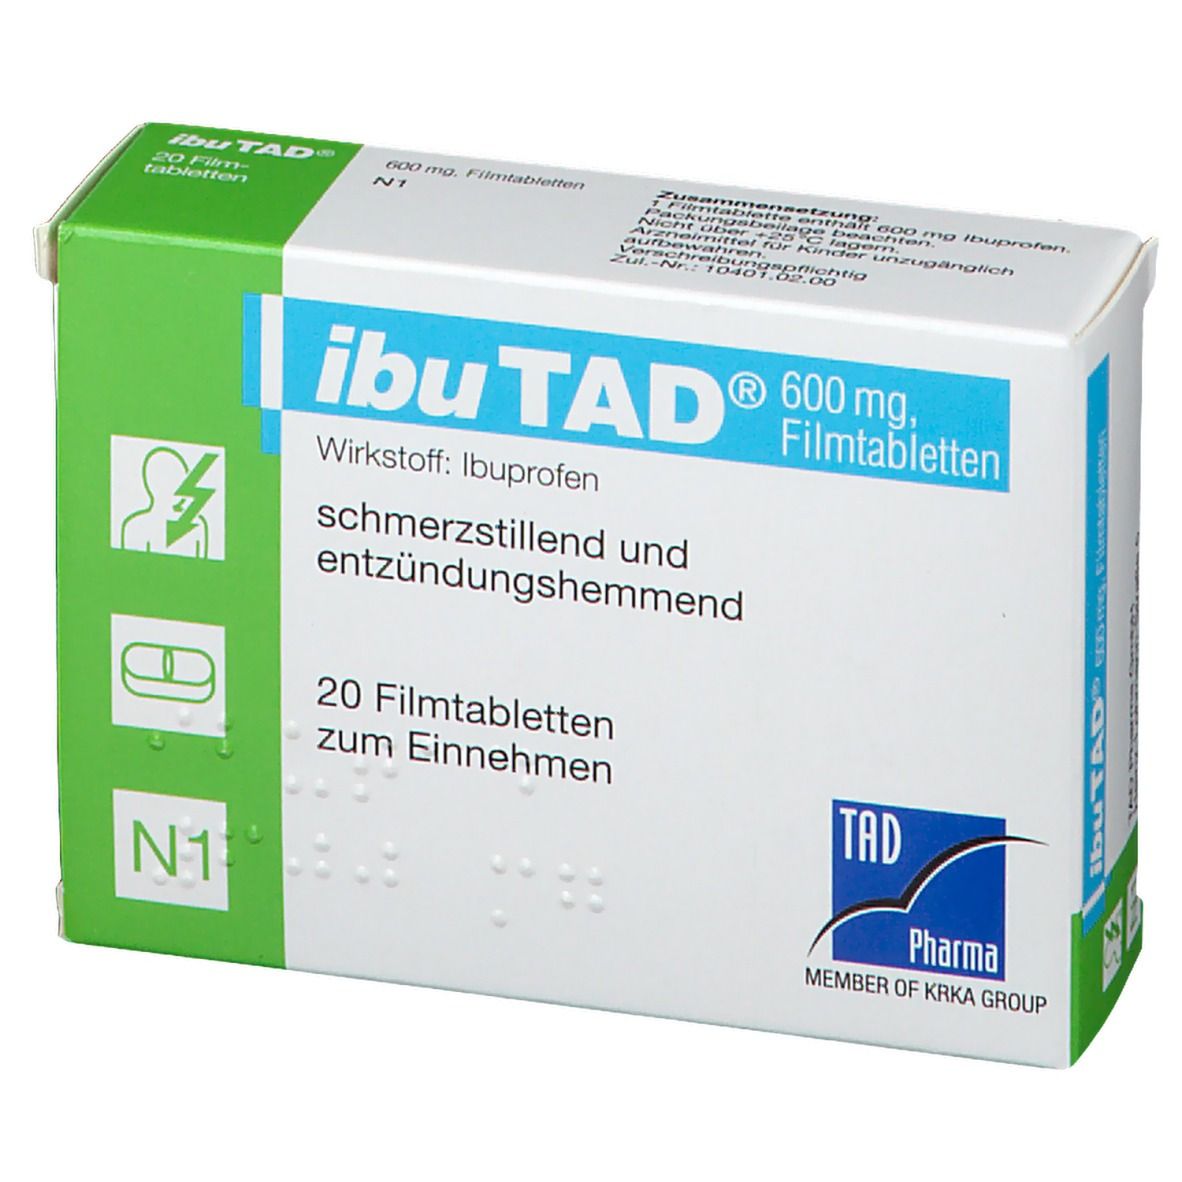 ibuTAD® 600 mg